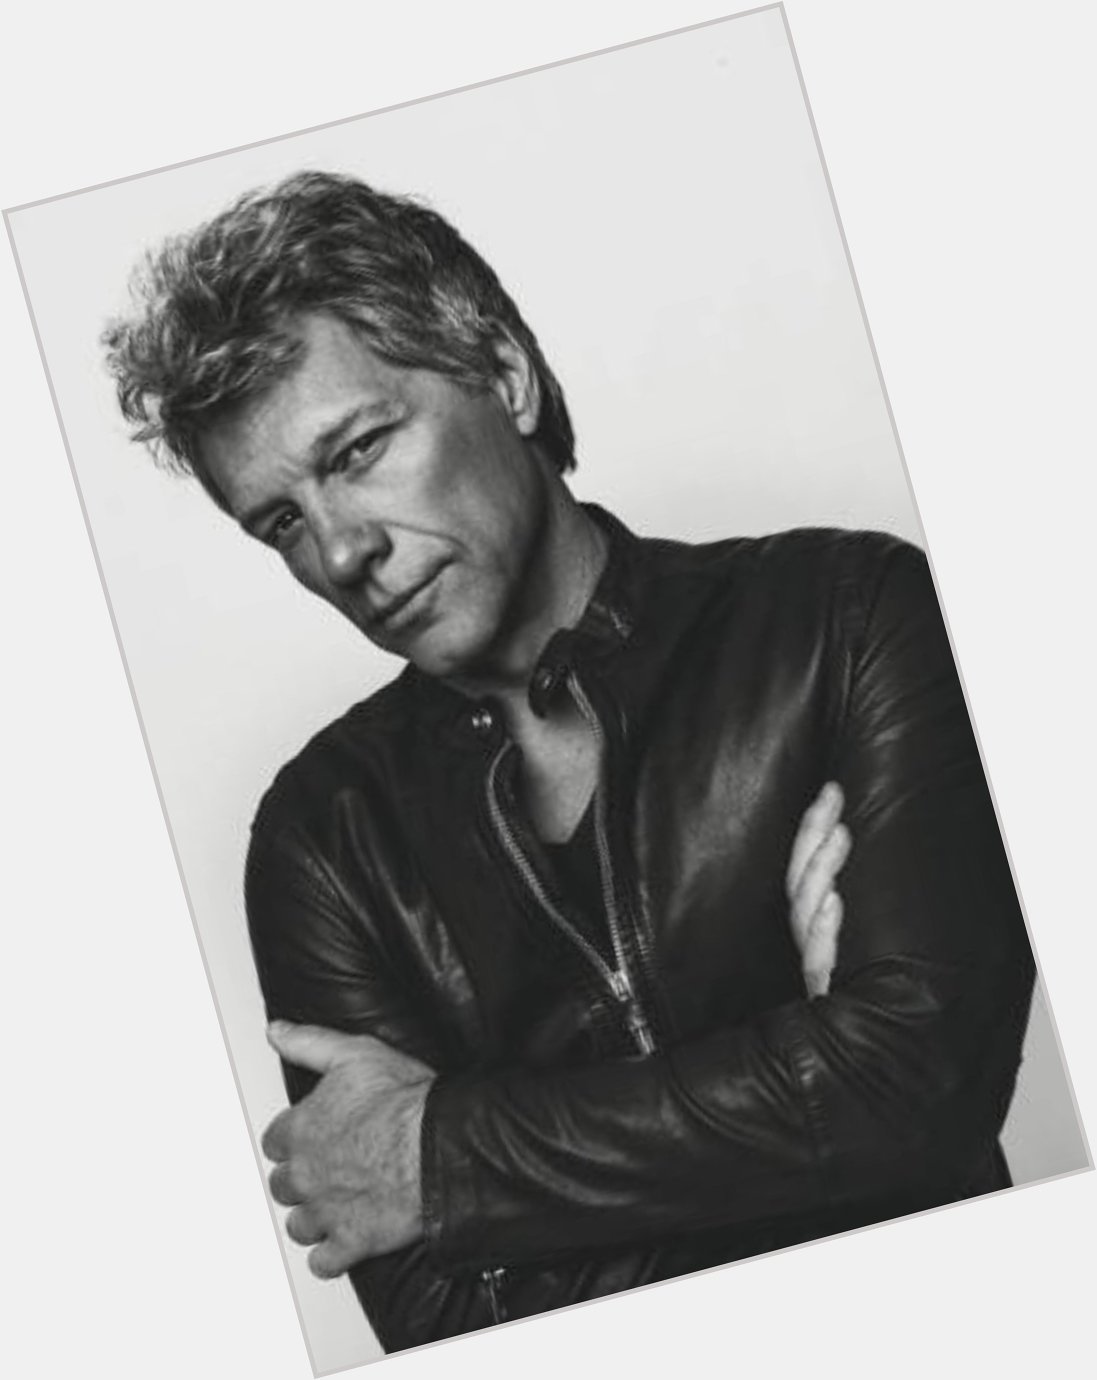 Happy Birthday to Jon Bon Jovi, born this day in 1962! 